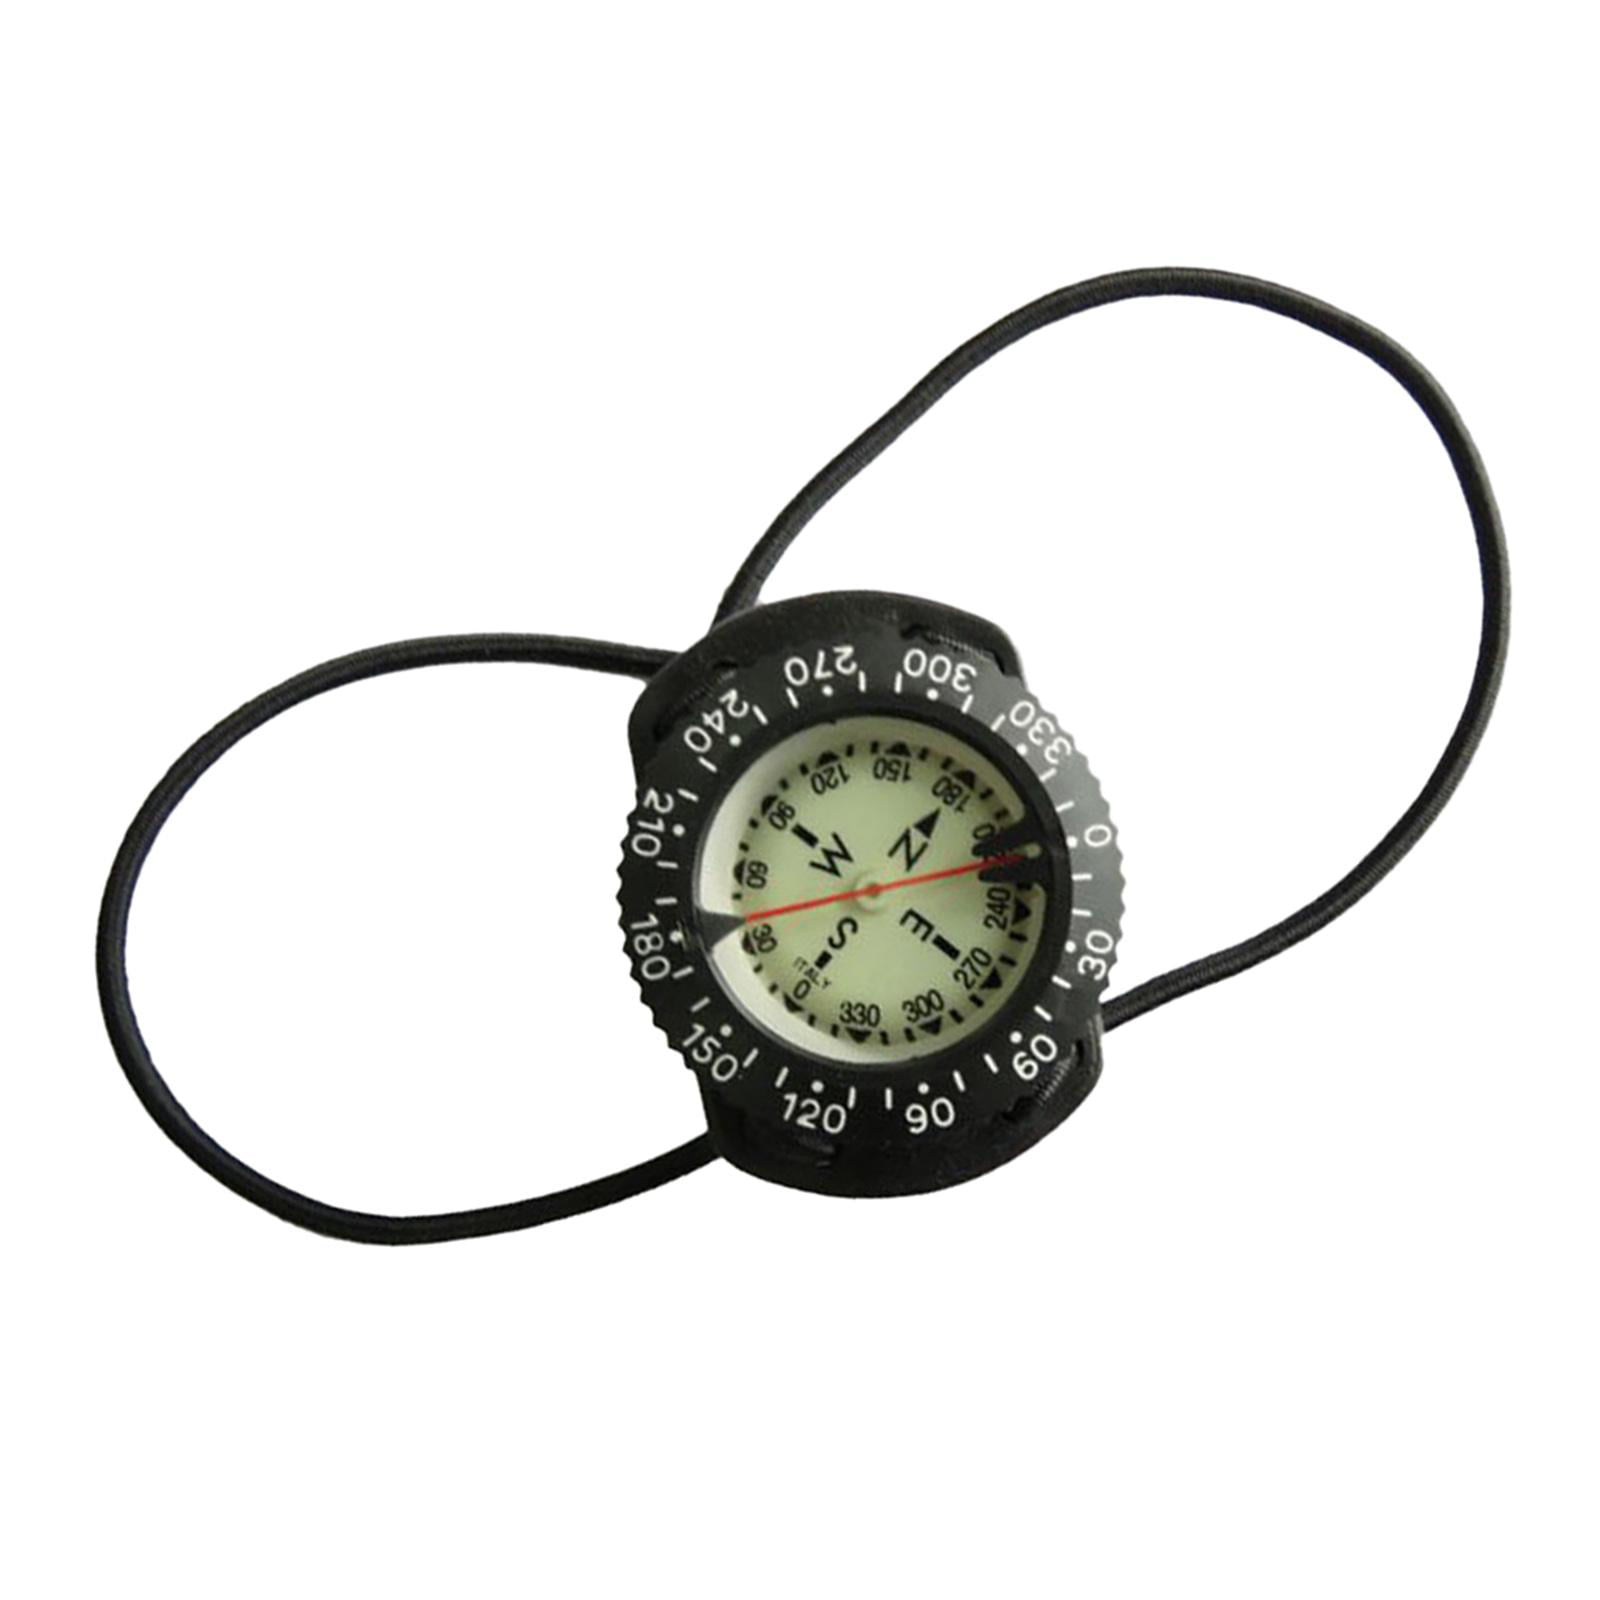 Scuba Diving Compass Professional Wrist Console Navigation Gauge Sport Outdoor 